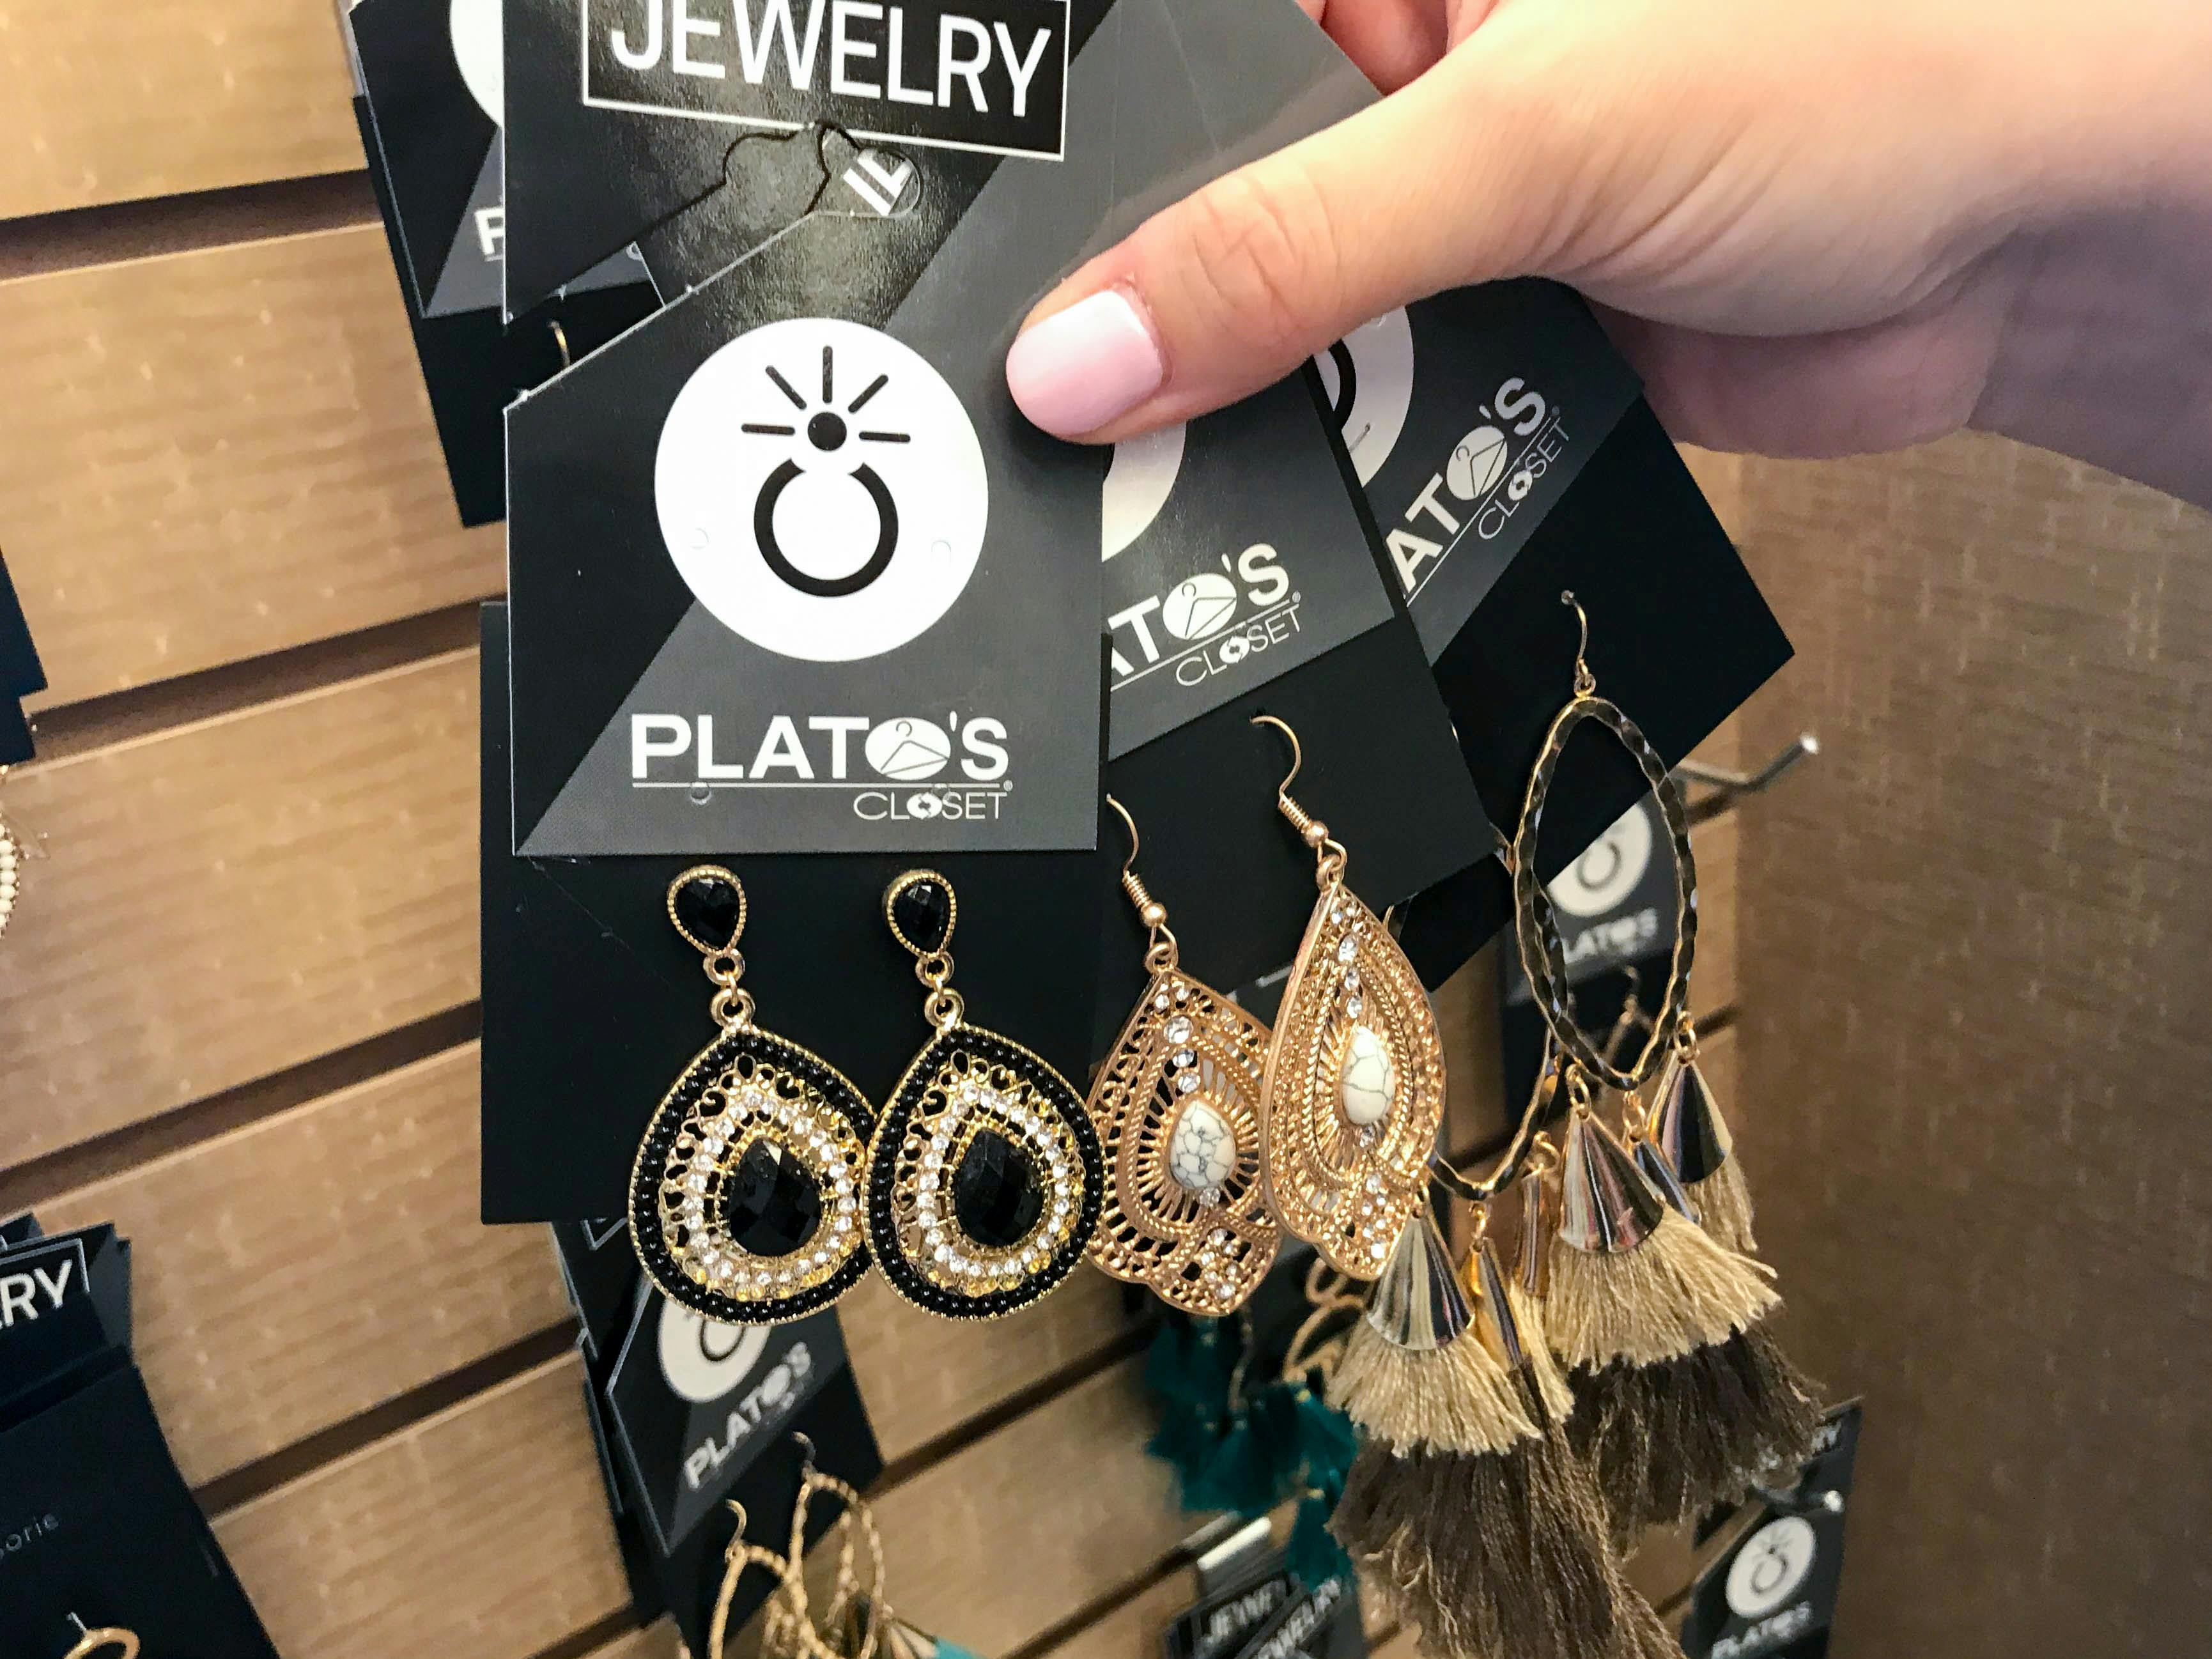 Jewelry on display at Plato's Closet